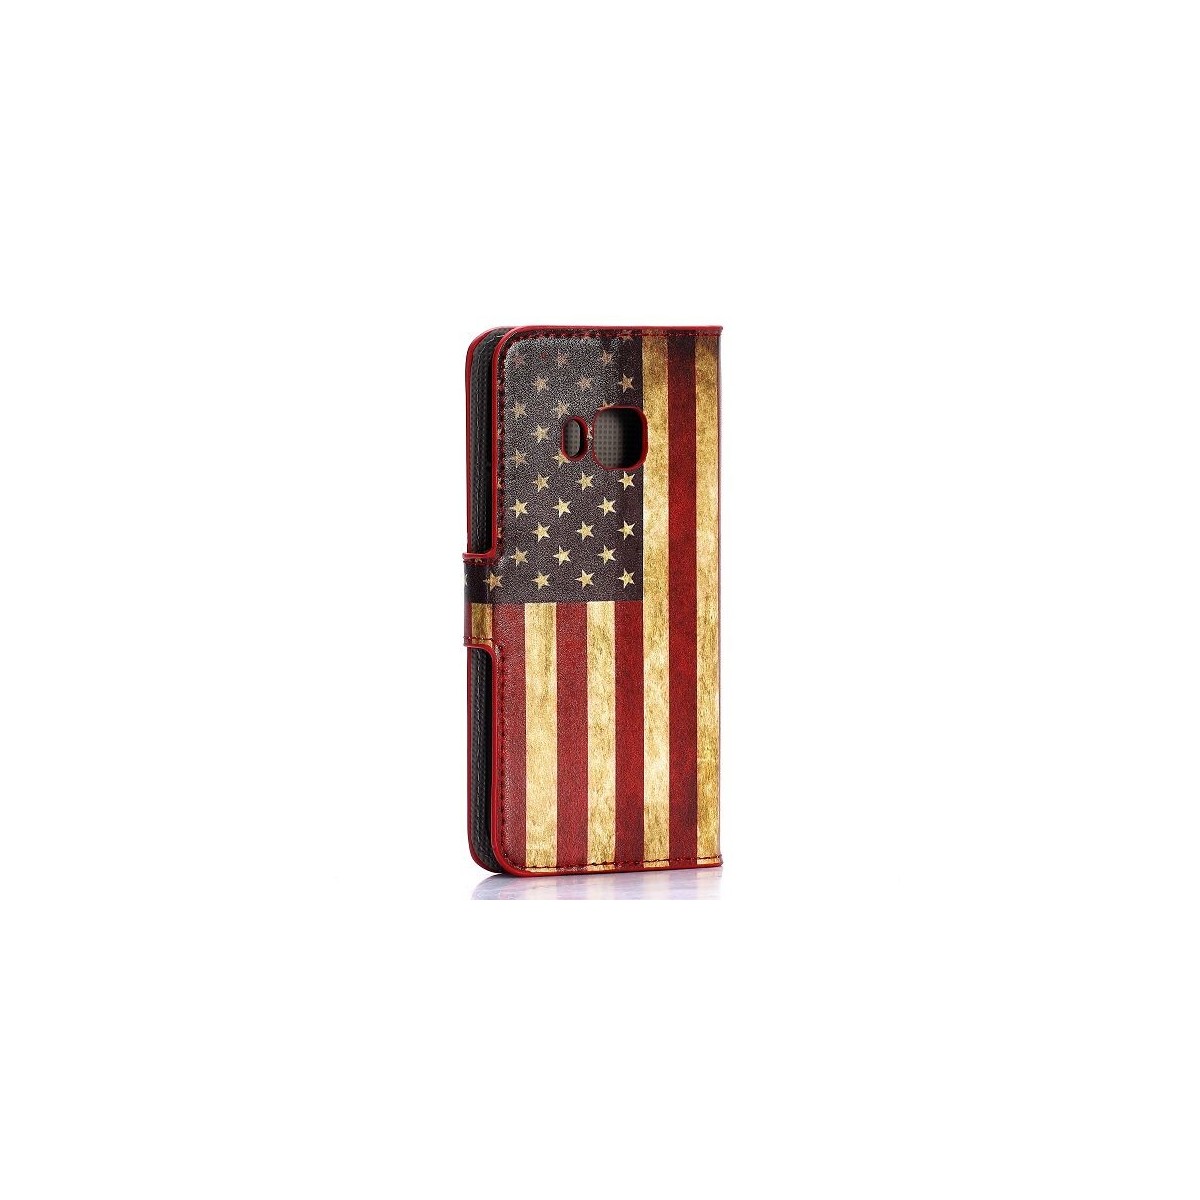 Etui HTC One M9 drapeau USA vintage